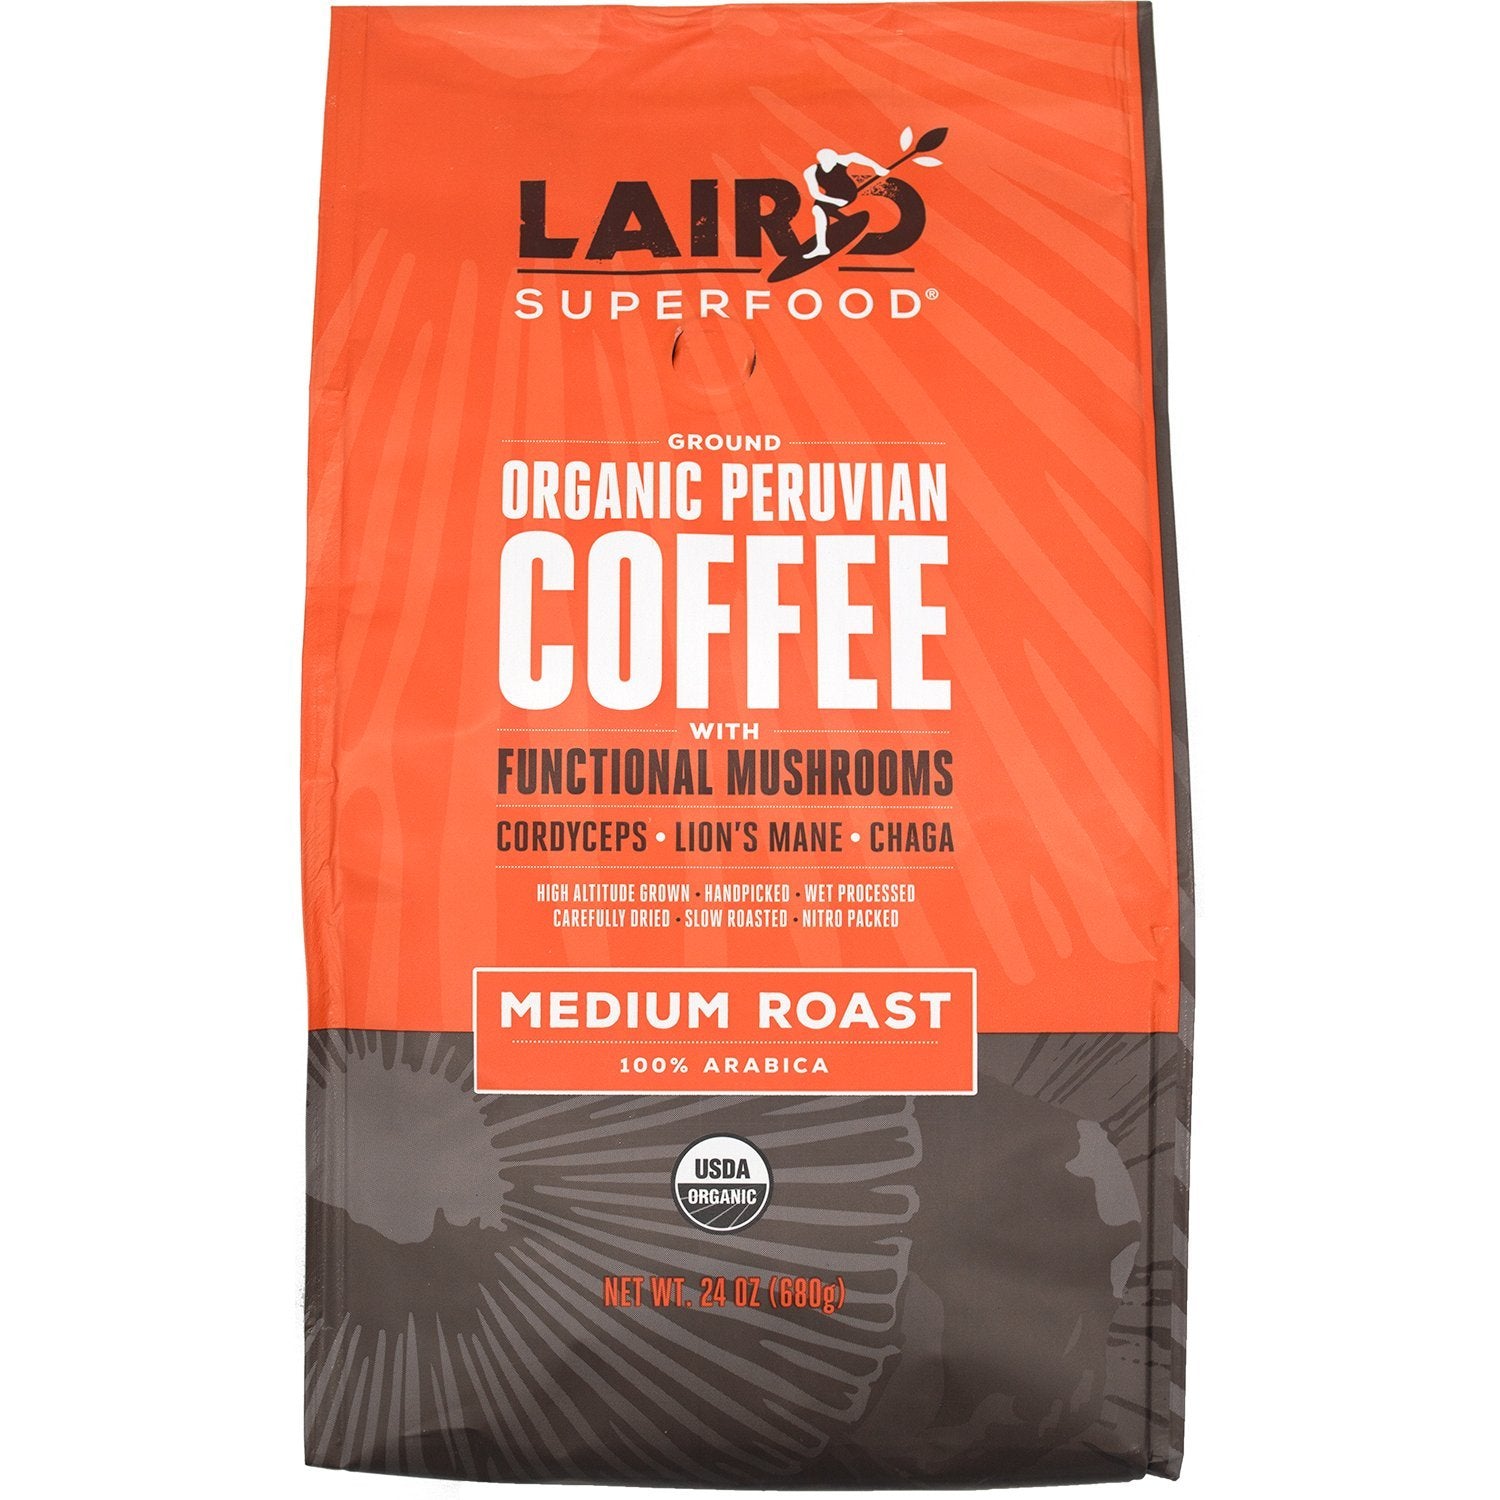 Laird Superfood Ground Organic Peruvian Coffee with Functional Mushrooms Laird Superfood Medium Roast 24 Ounce 